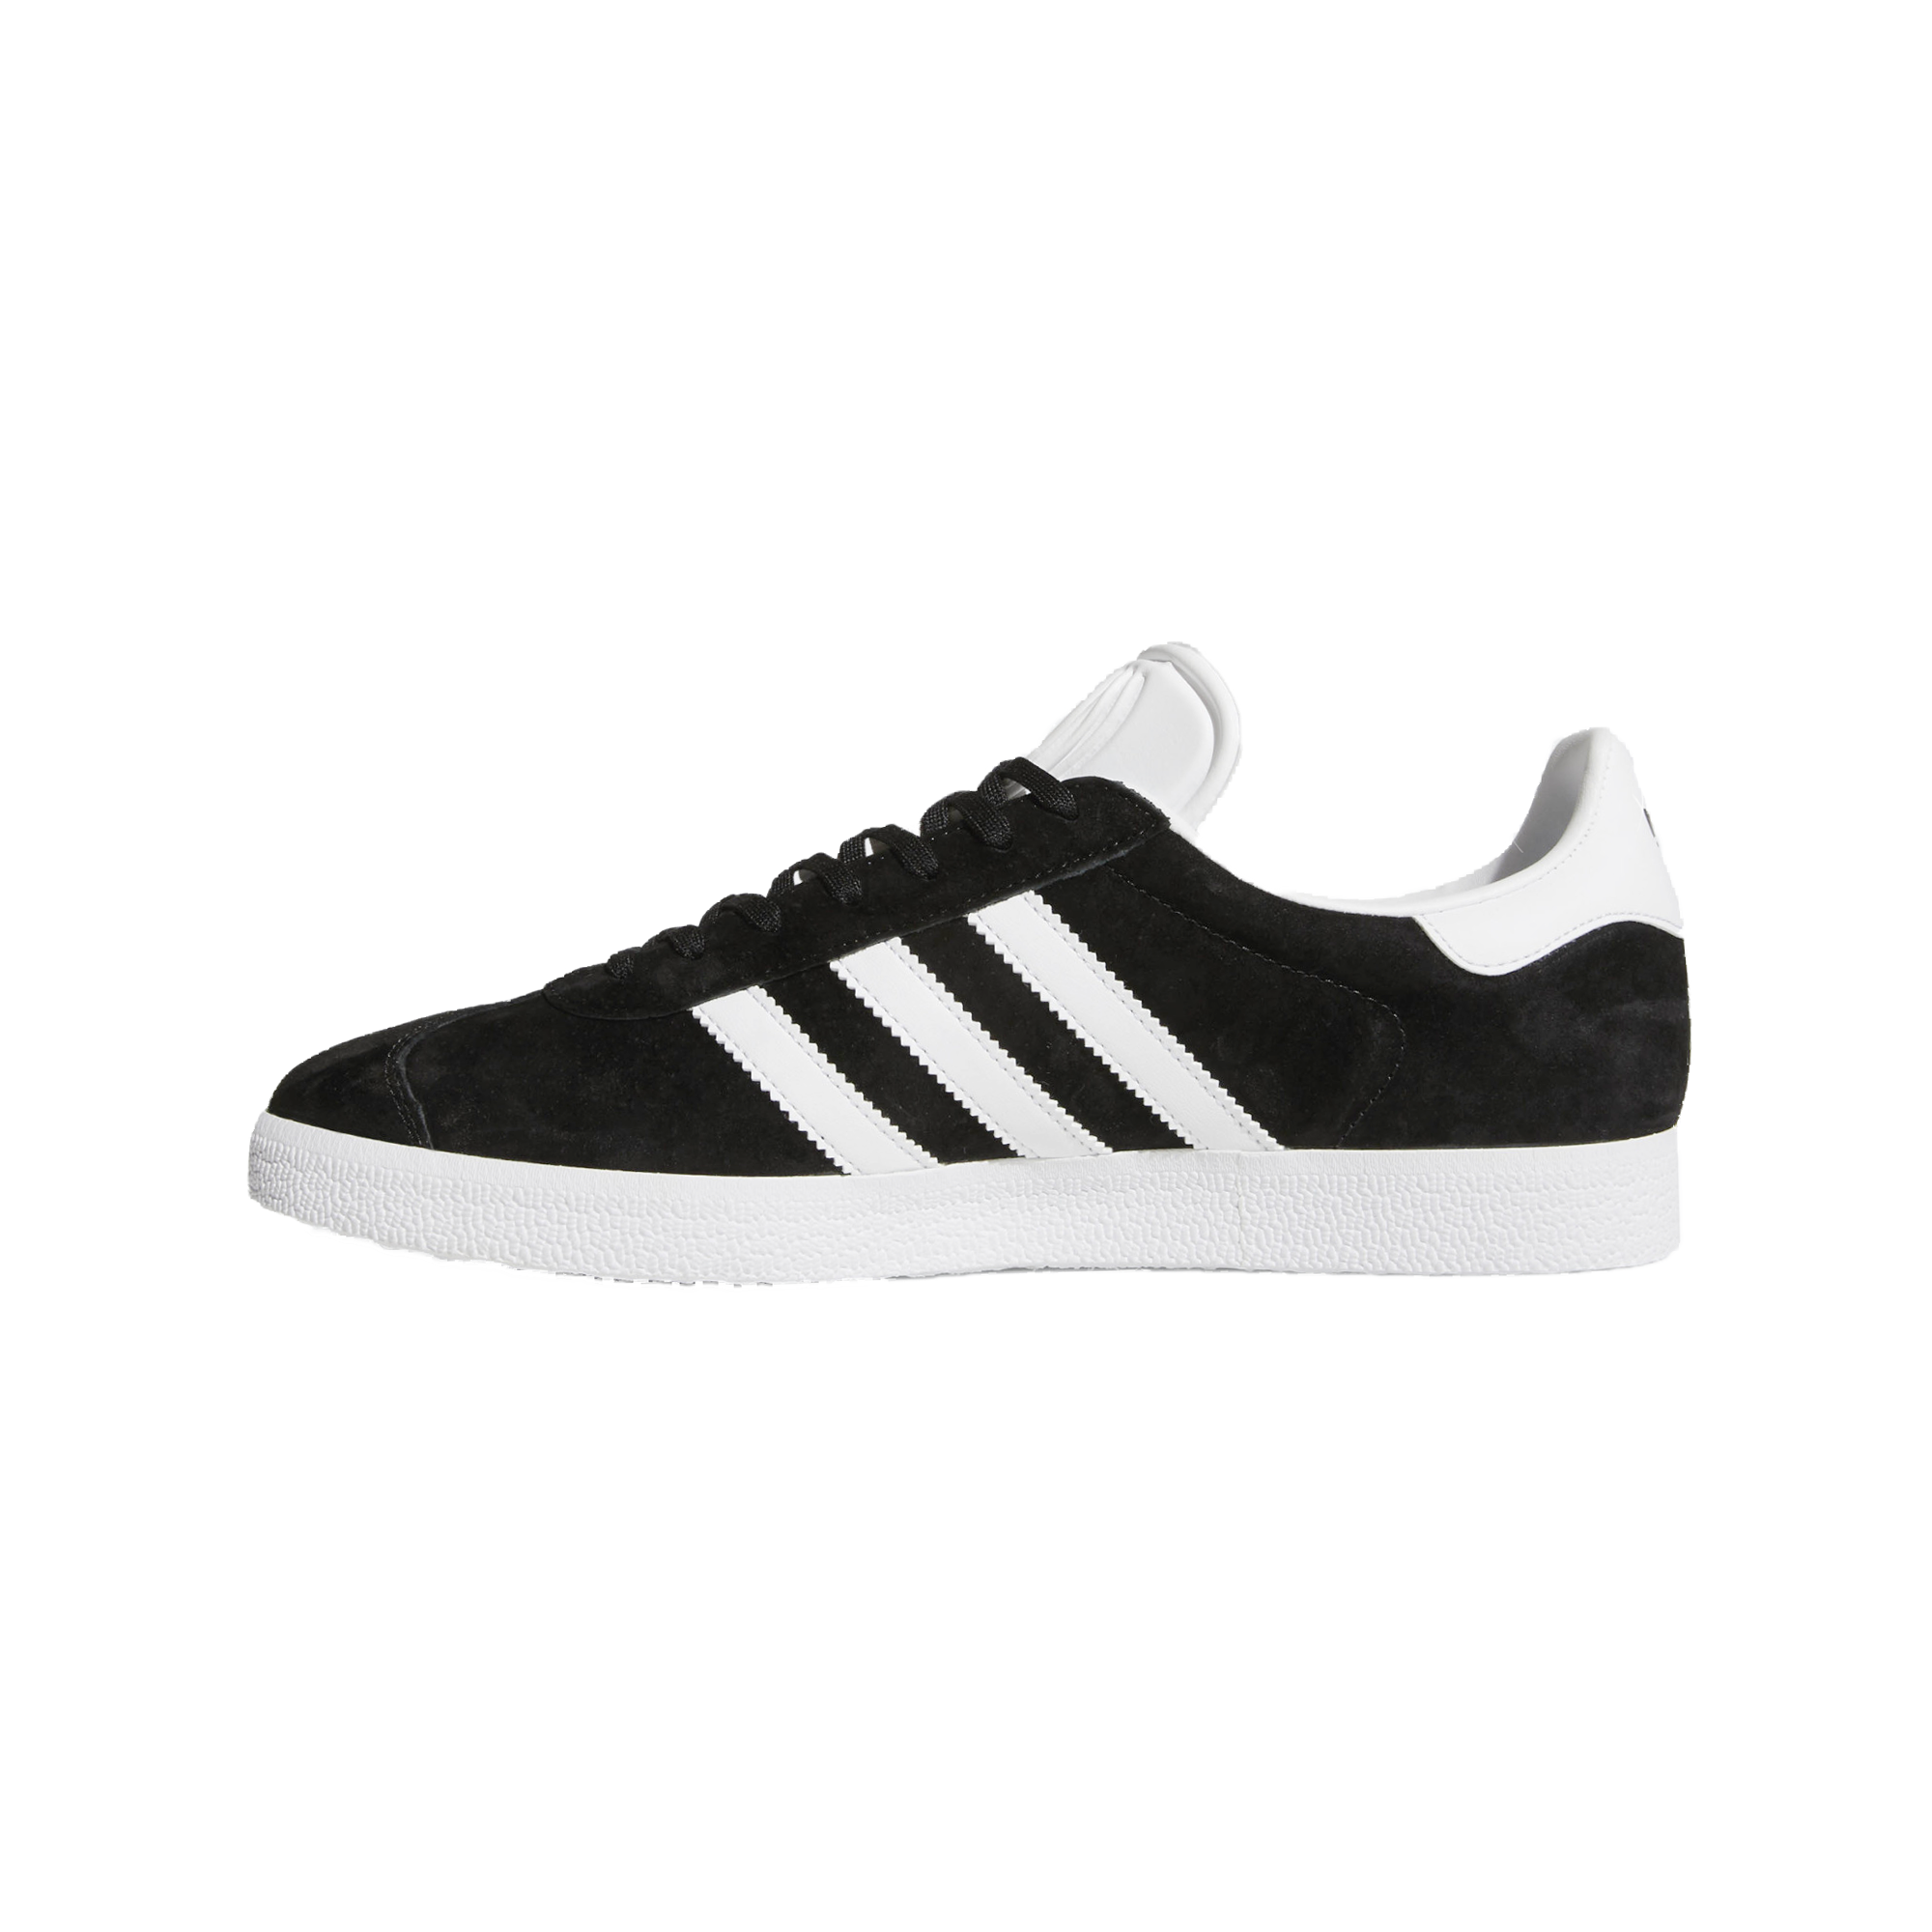 adidas gazelle sneakers black